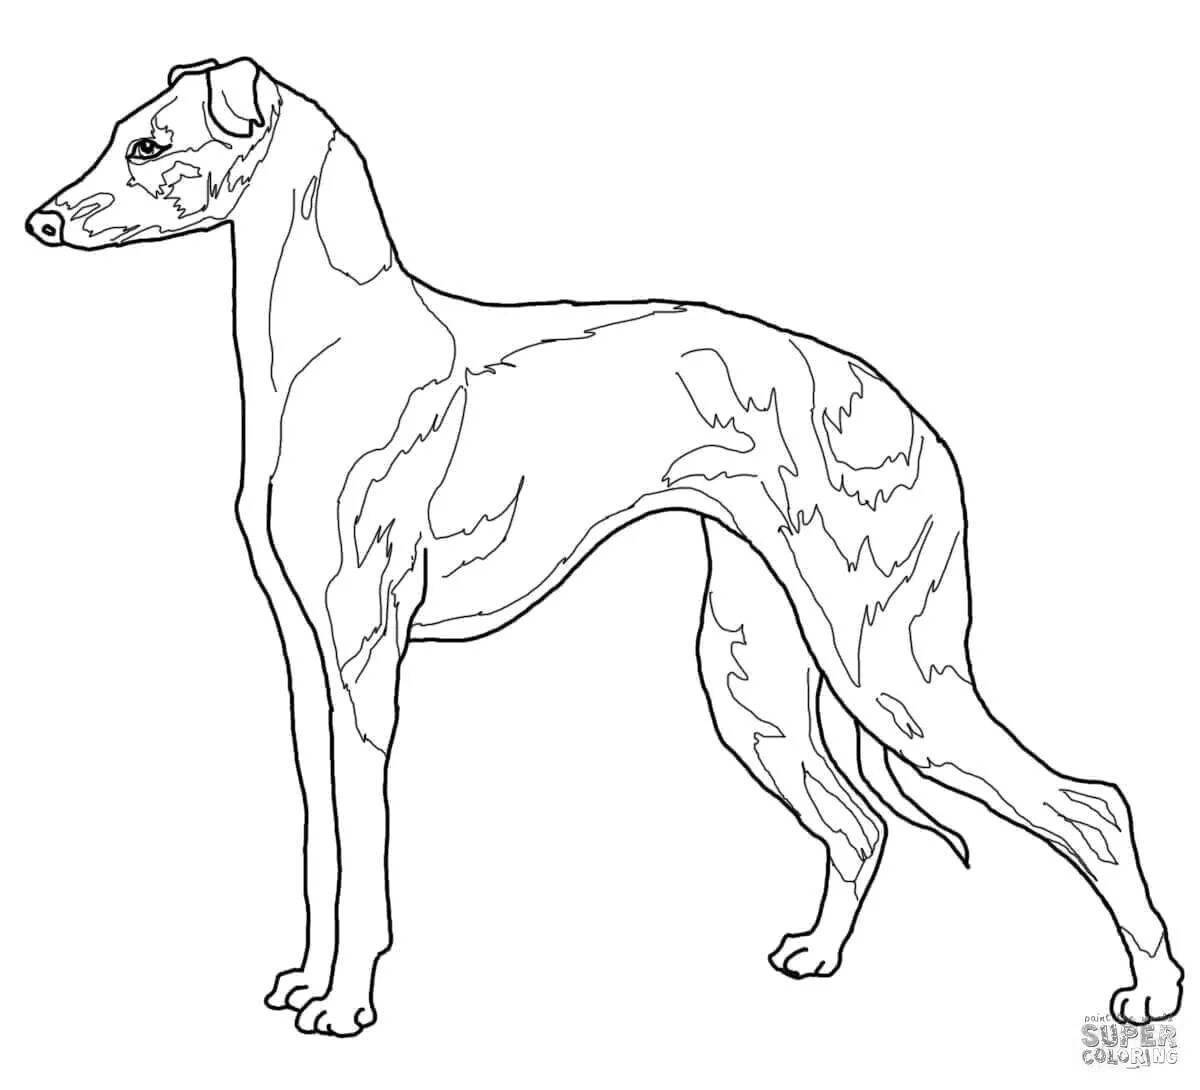 Раскраска озорная немецкая собака